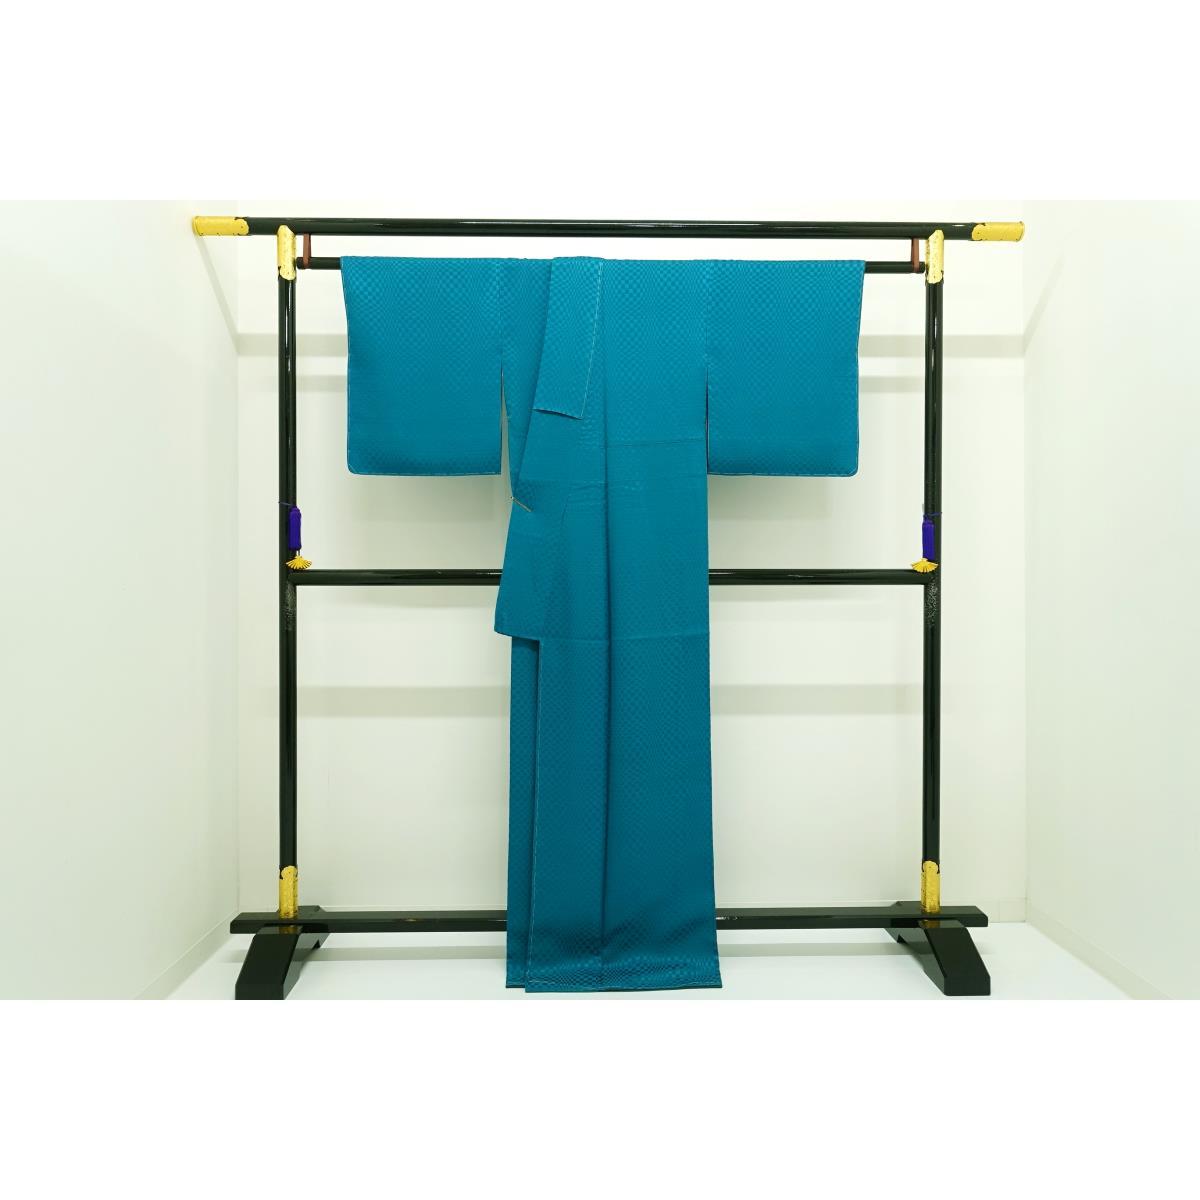 [Unused items] Solid color kimono/naga undergarment 2-piece set Width L size